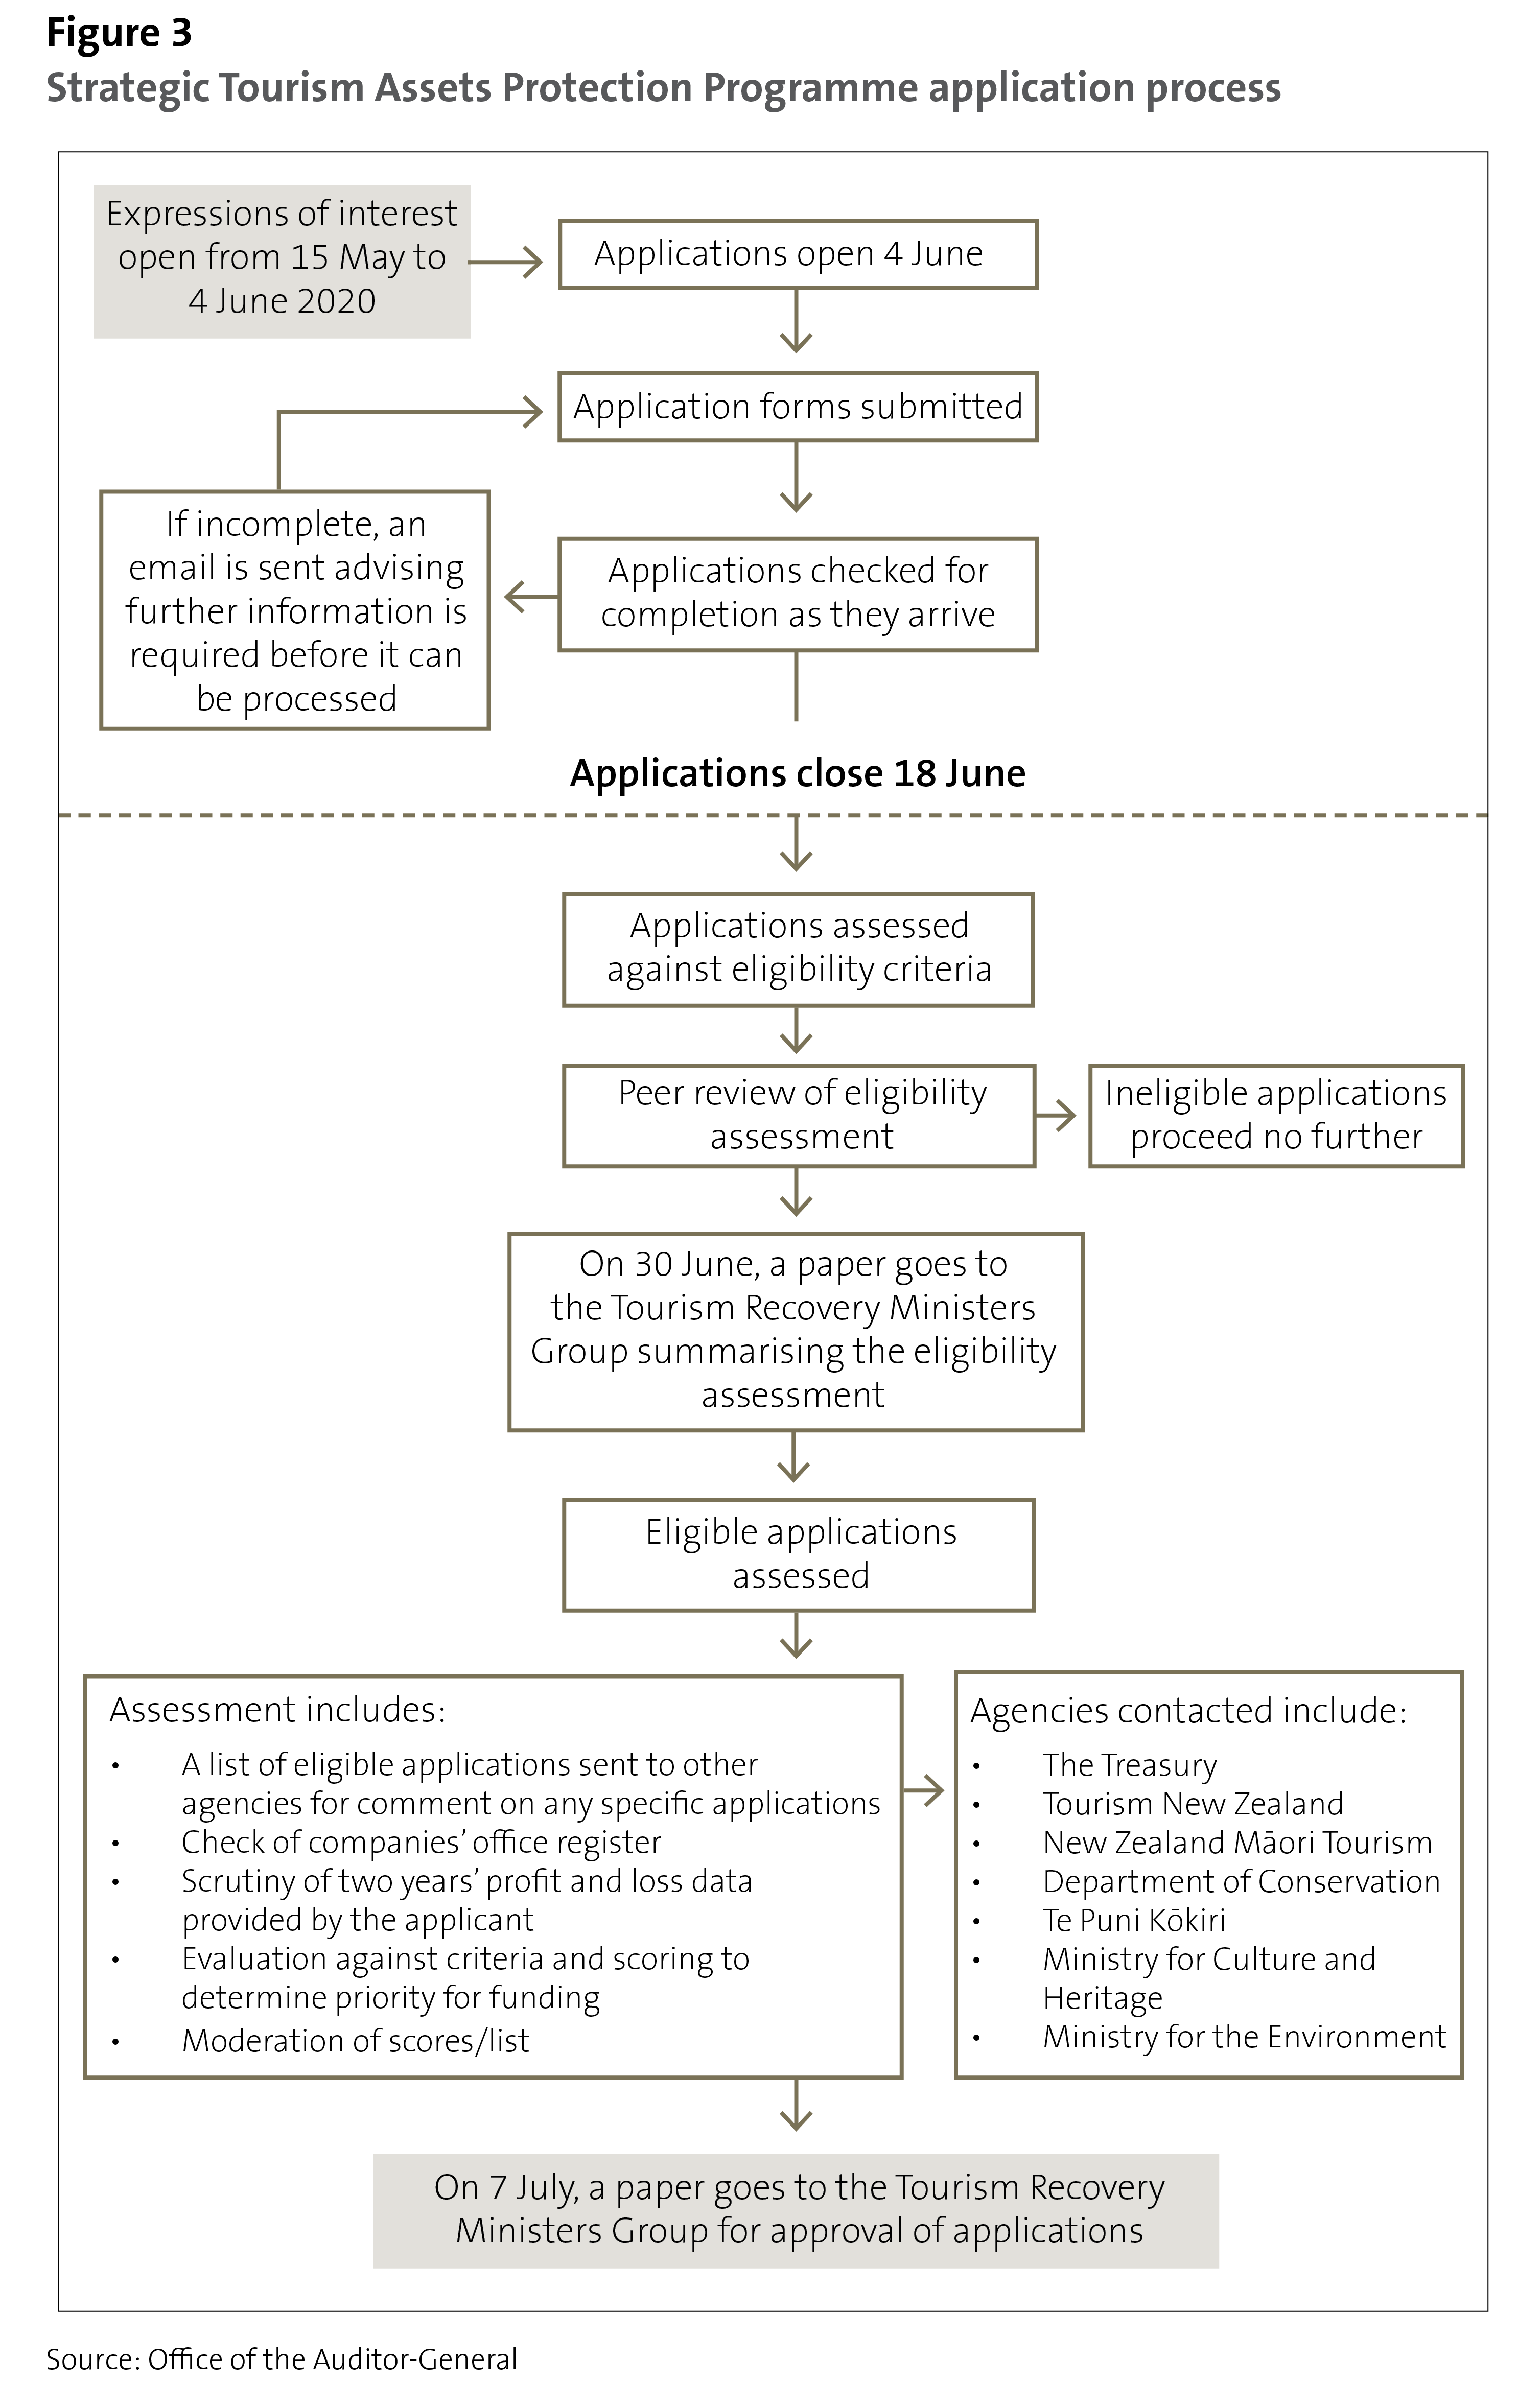 Figure 3: Strategic Tourism Assets Protection Programme application process